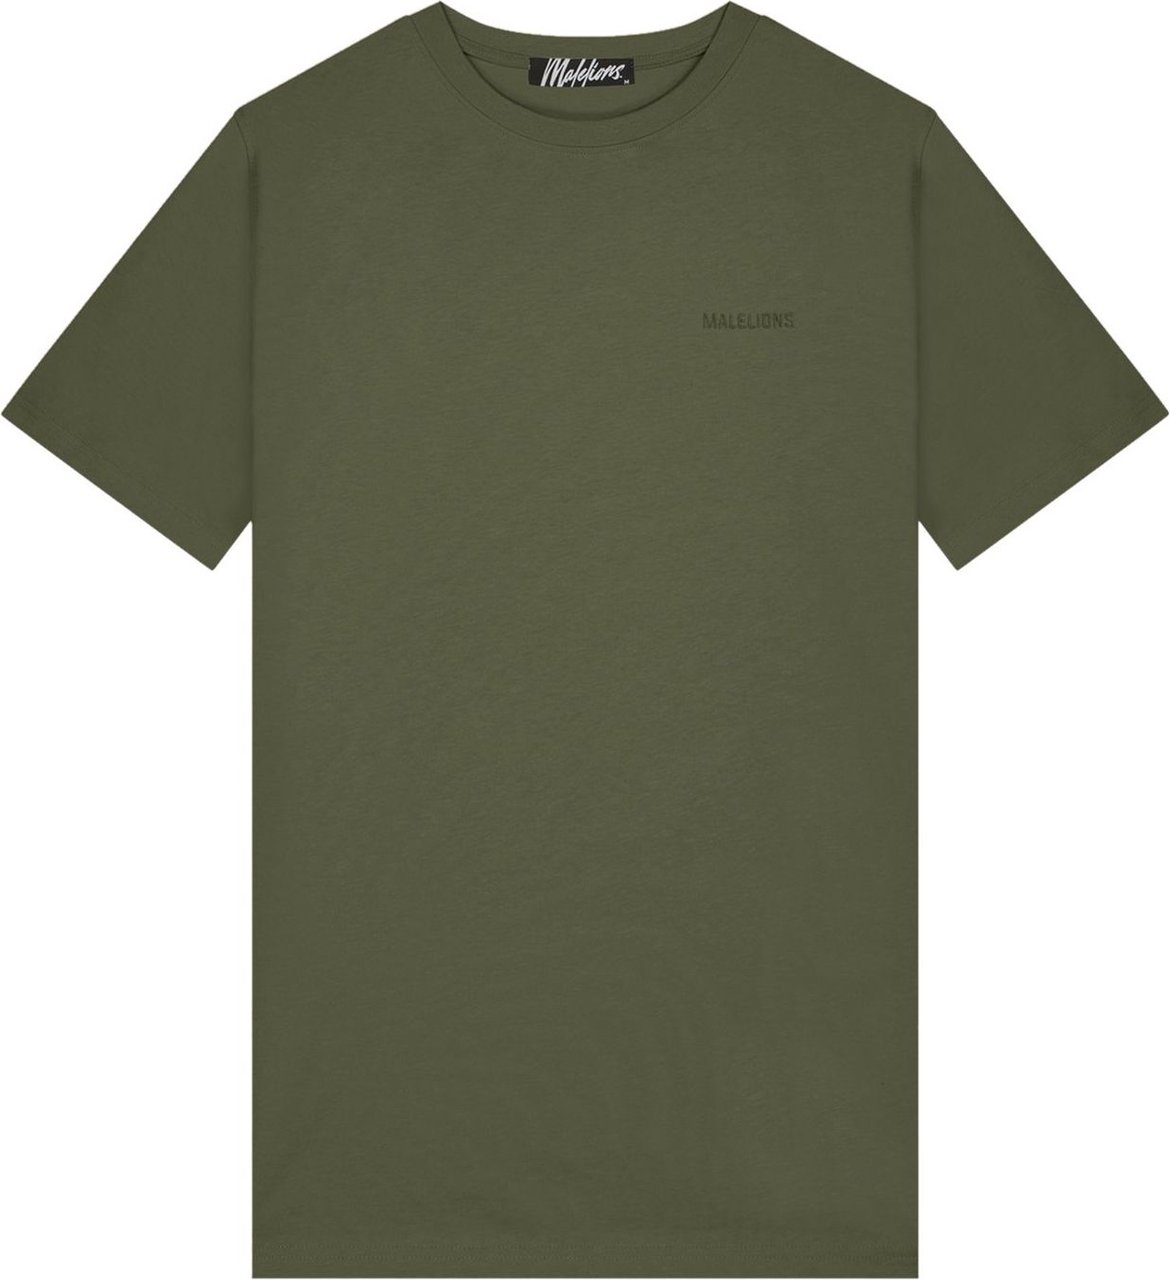 Malelions Logo T-Shirt - Light Army Groen